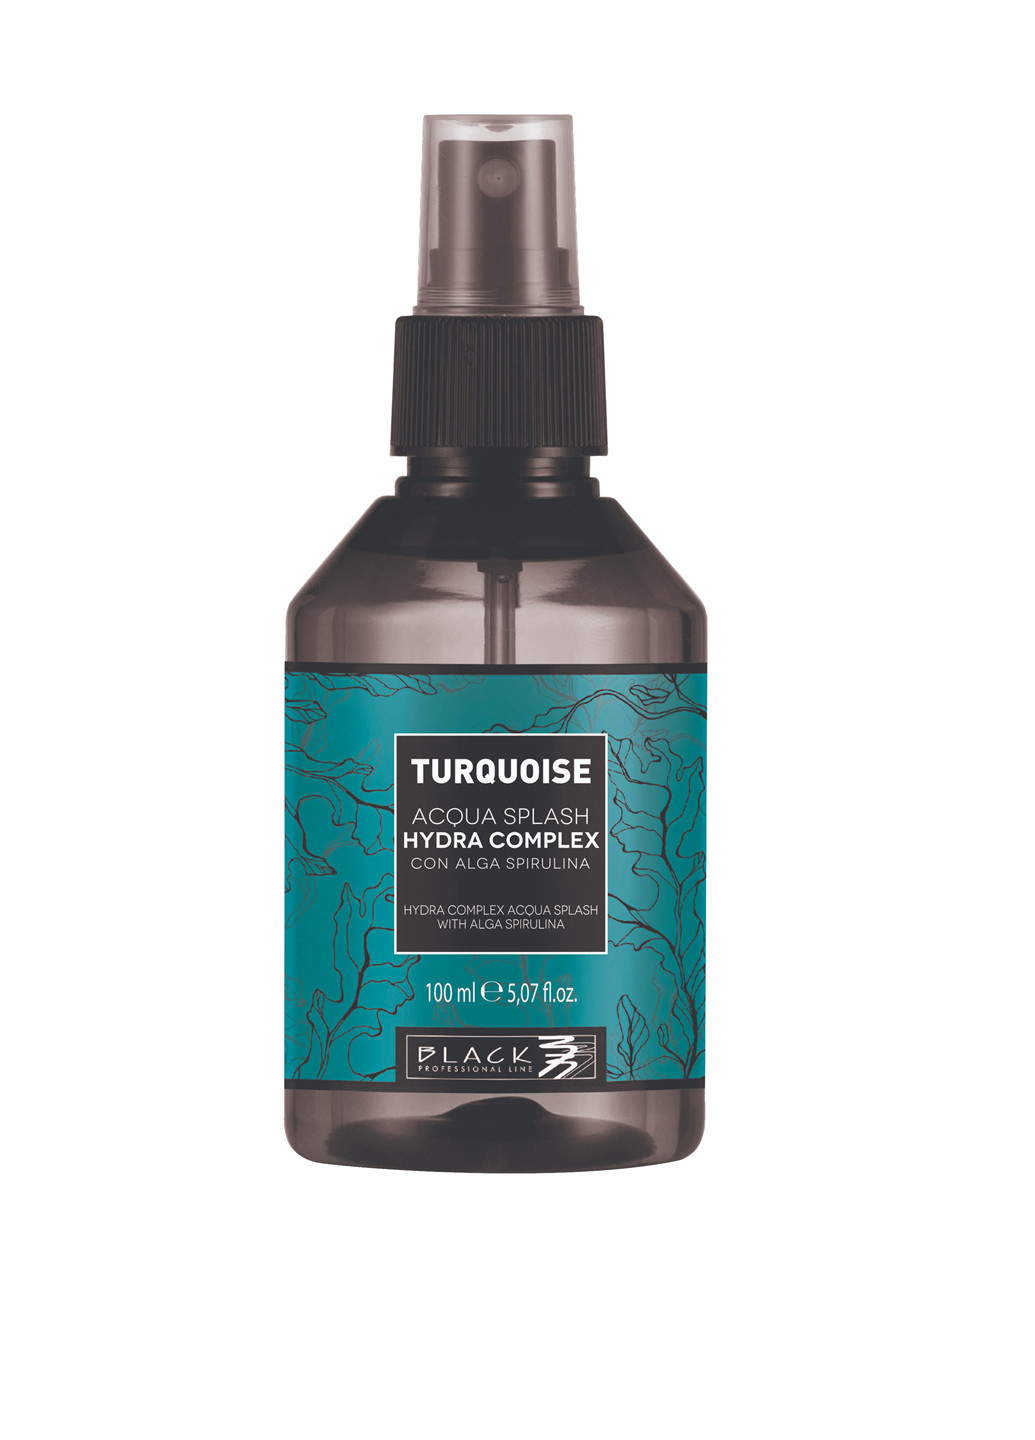 Спрей для волосся Turquoise Hydra Complex Aqua Splash, 100 мл Black Professional Line (182427466)